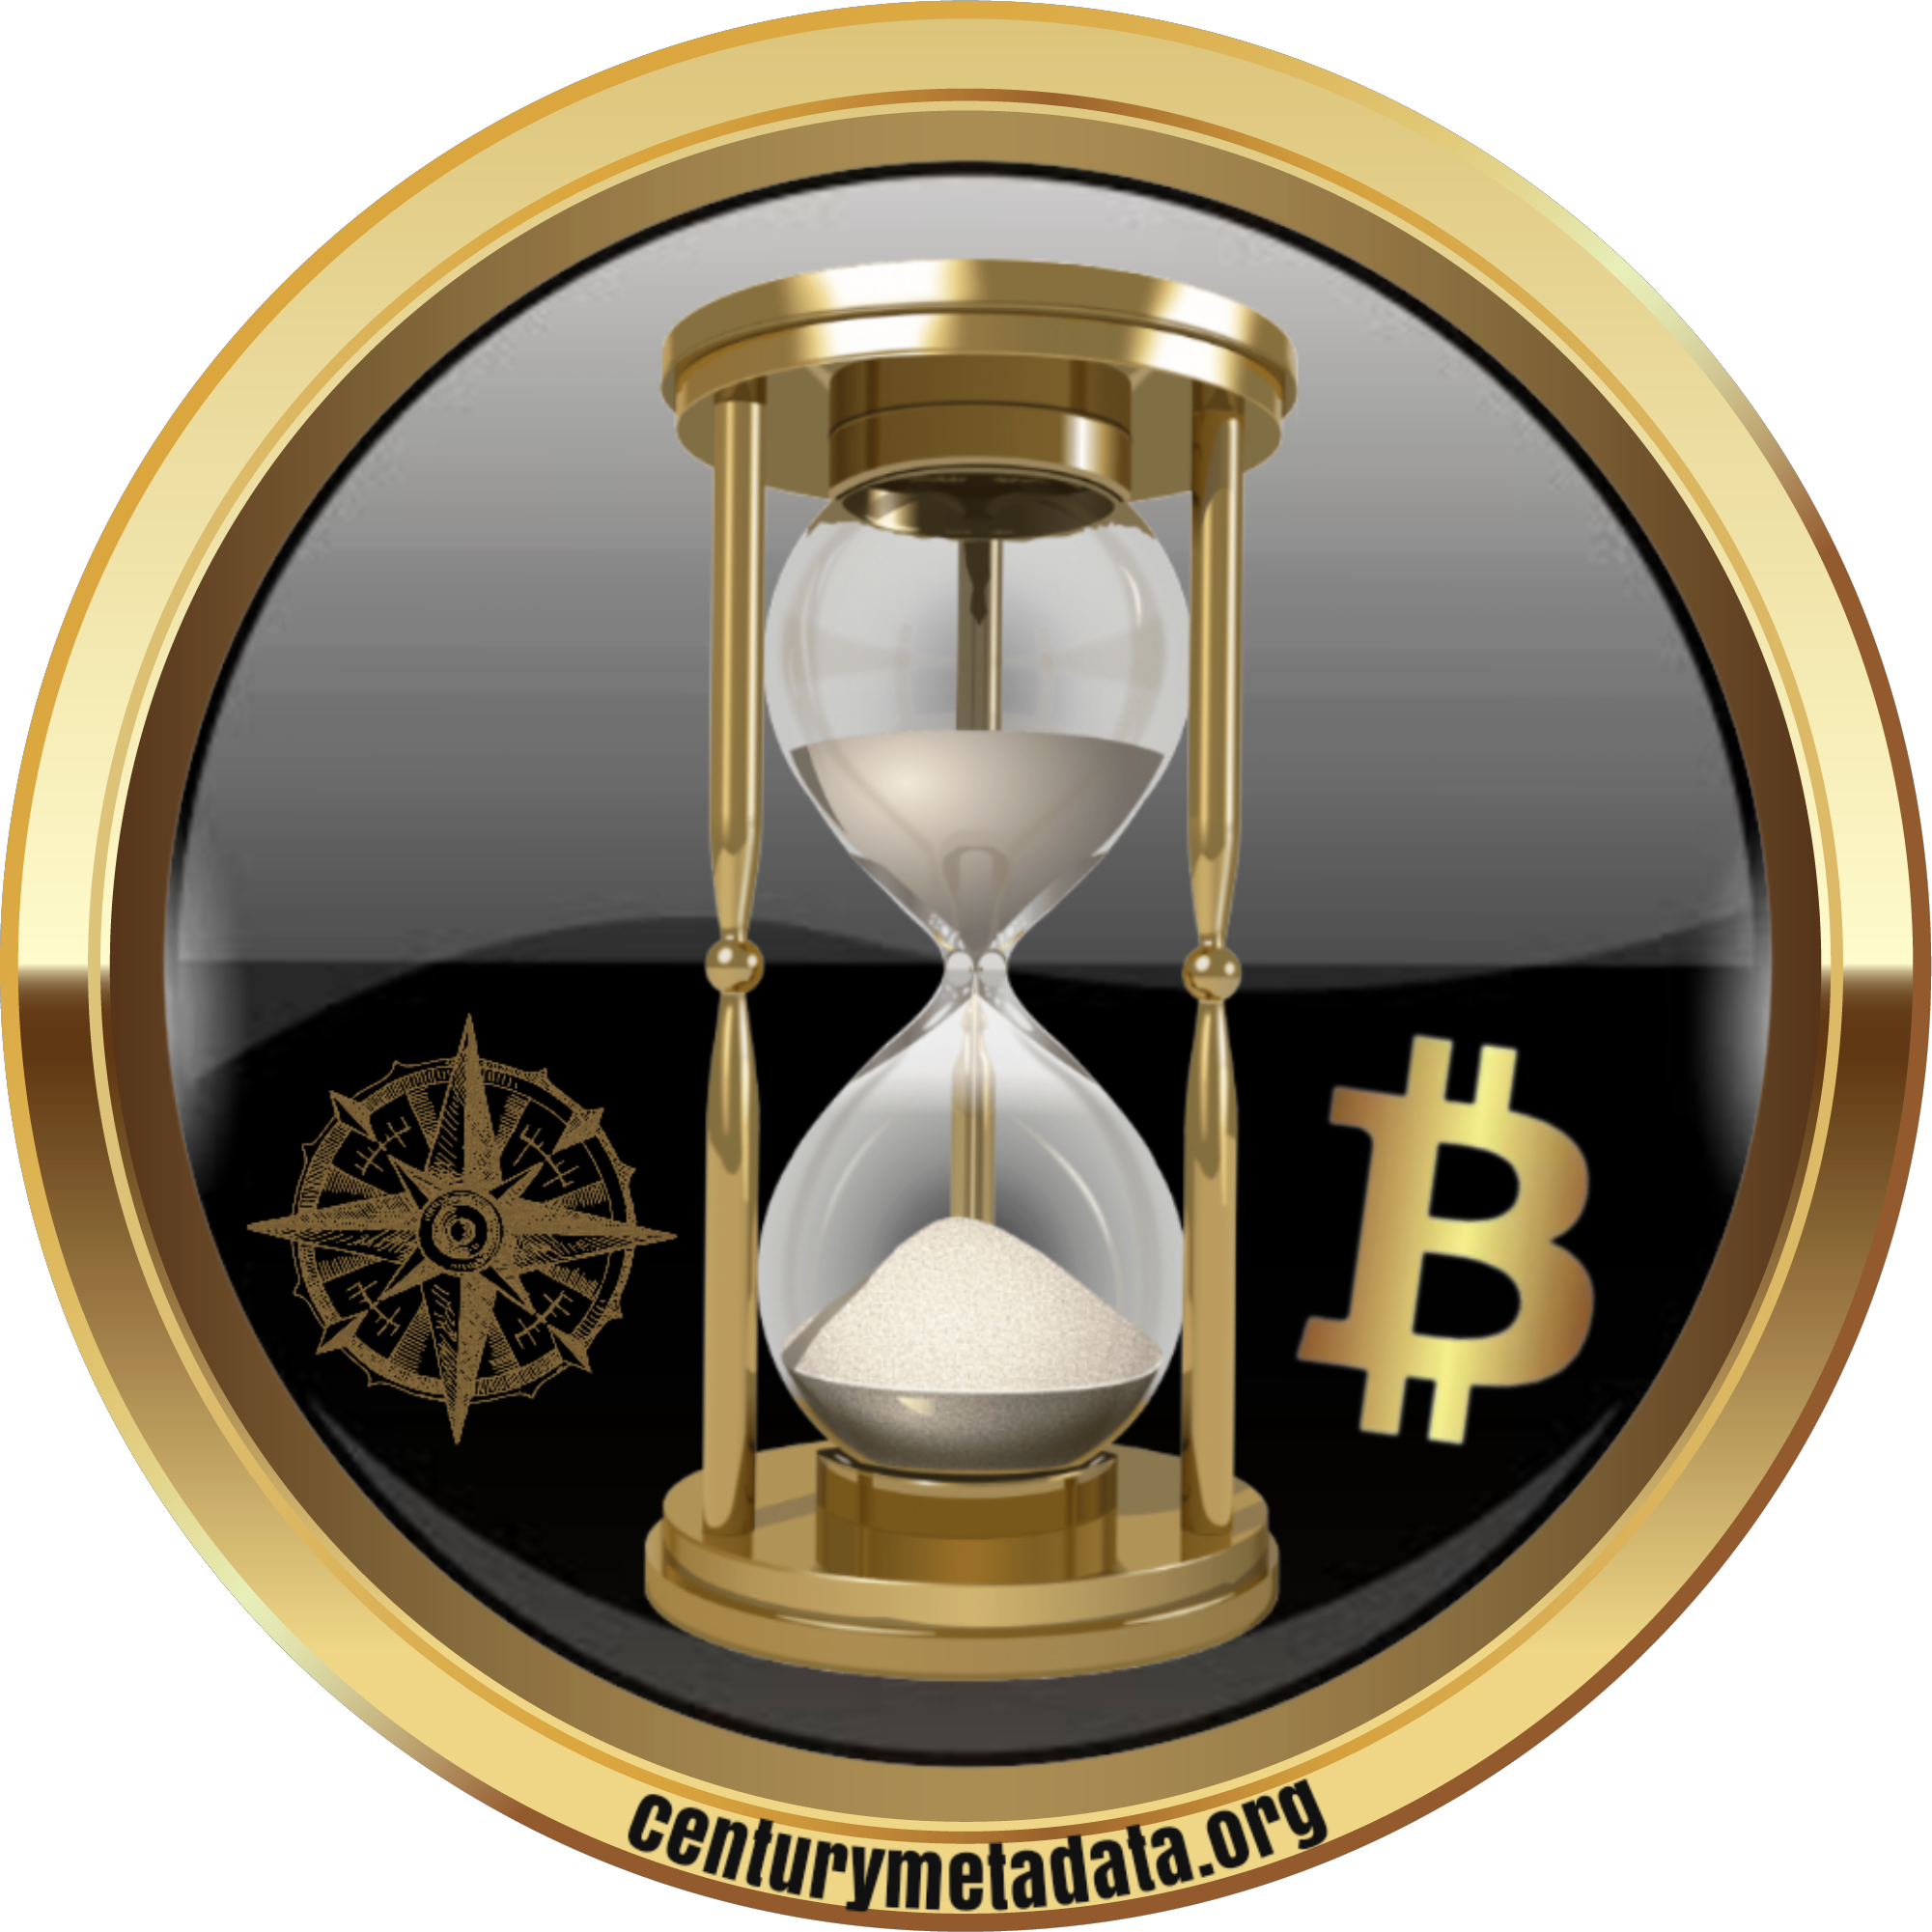 centurymetadata.org Logo by @BitcoinArt3 on Twitter